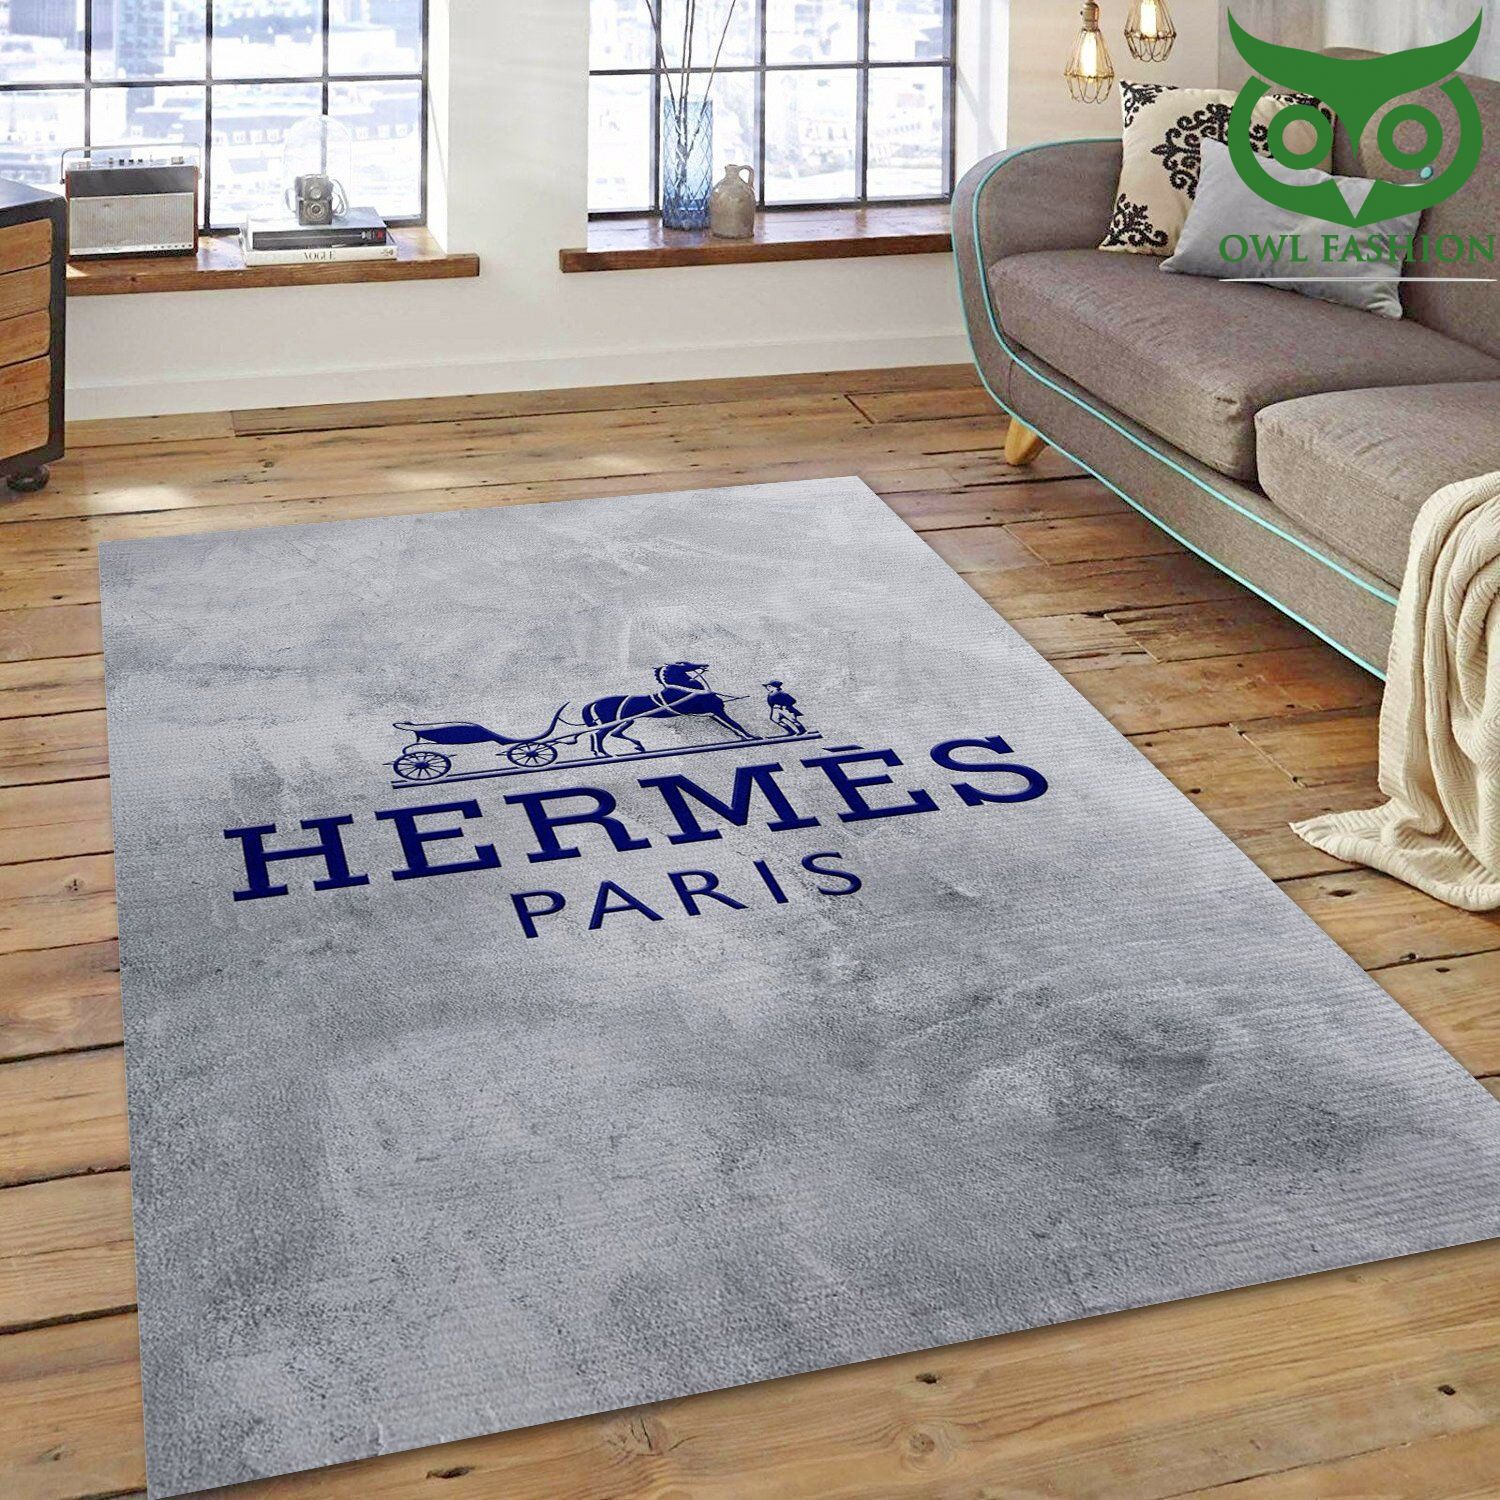 Luxury Hermes Paris Art carpet rug Home and floor Decoration